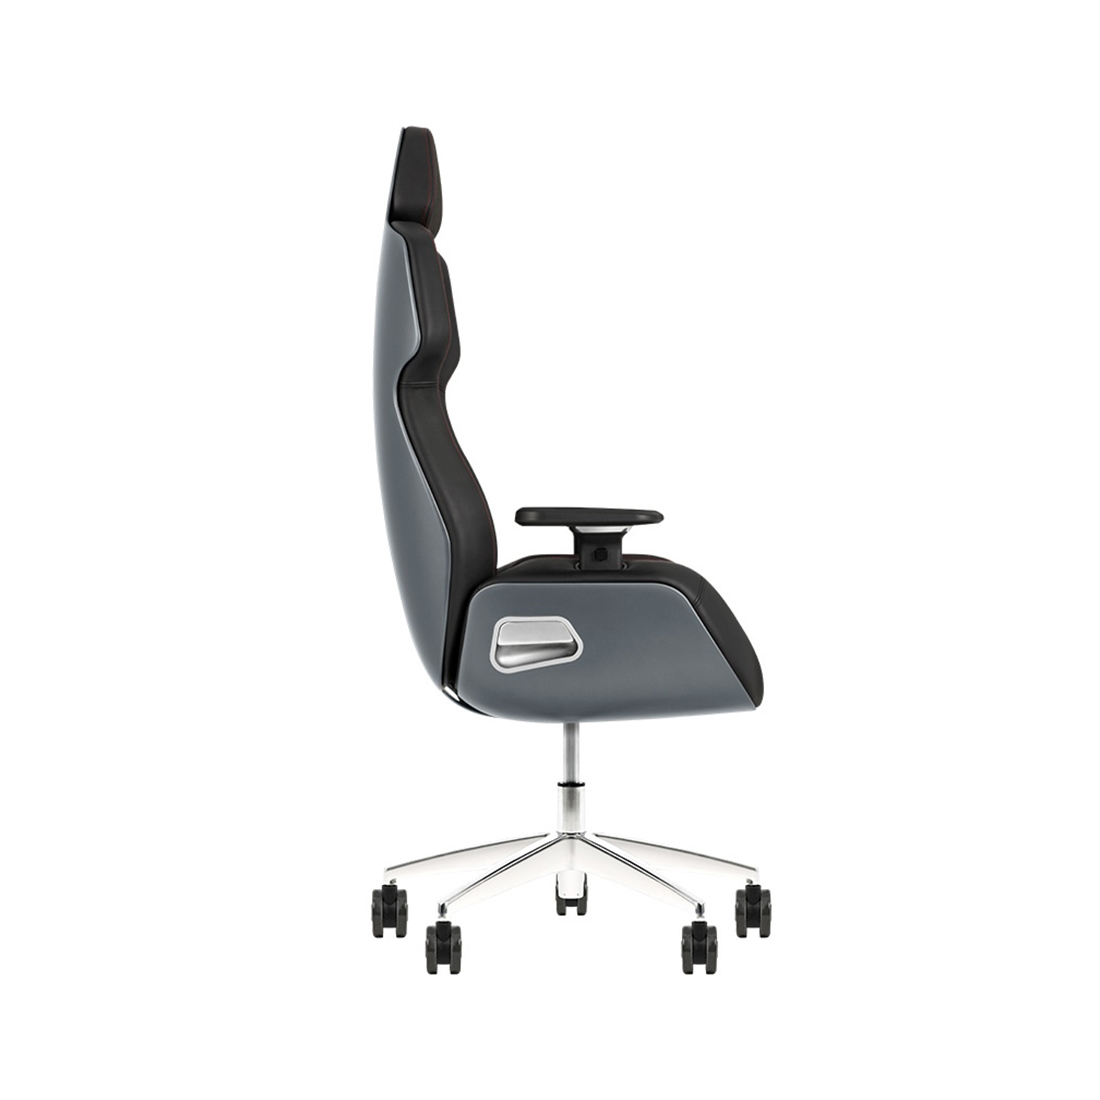 Игровое компьютерное кресло Thermaltake ARGENT E700 Space Gray